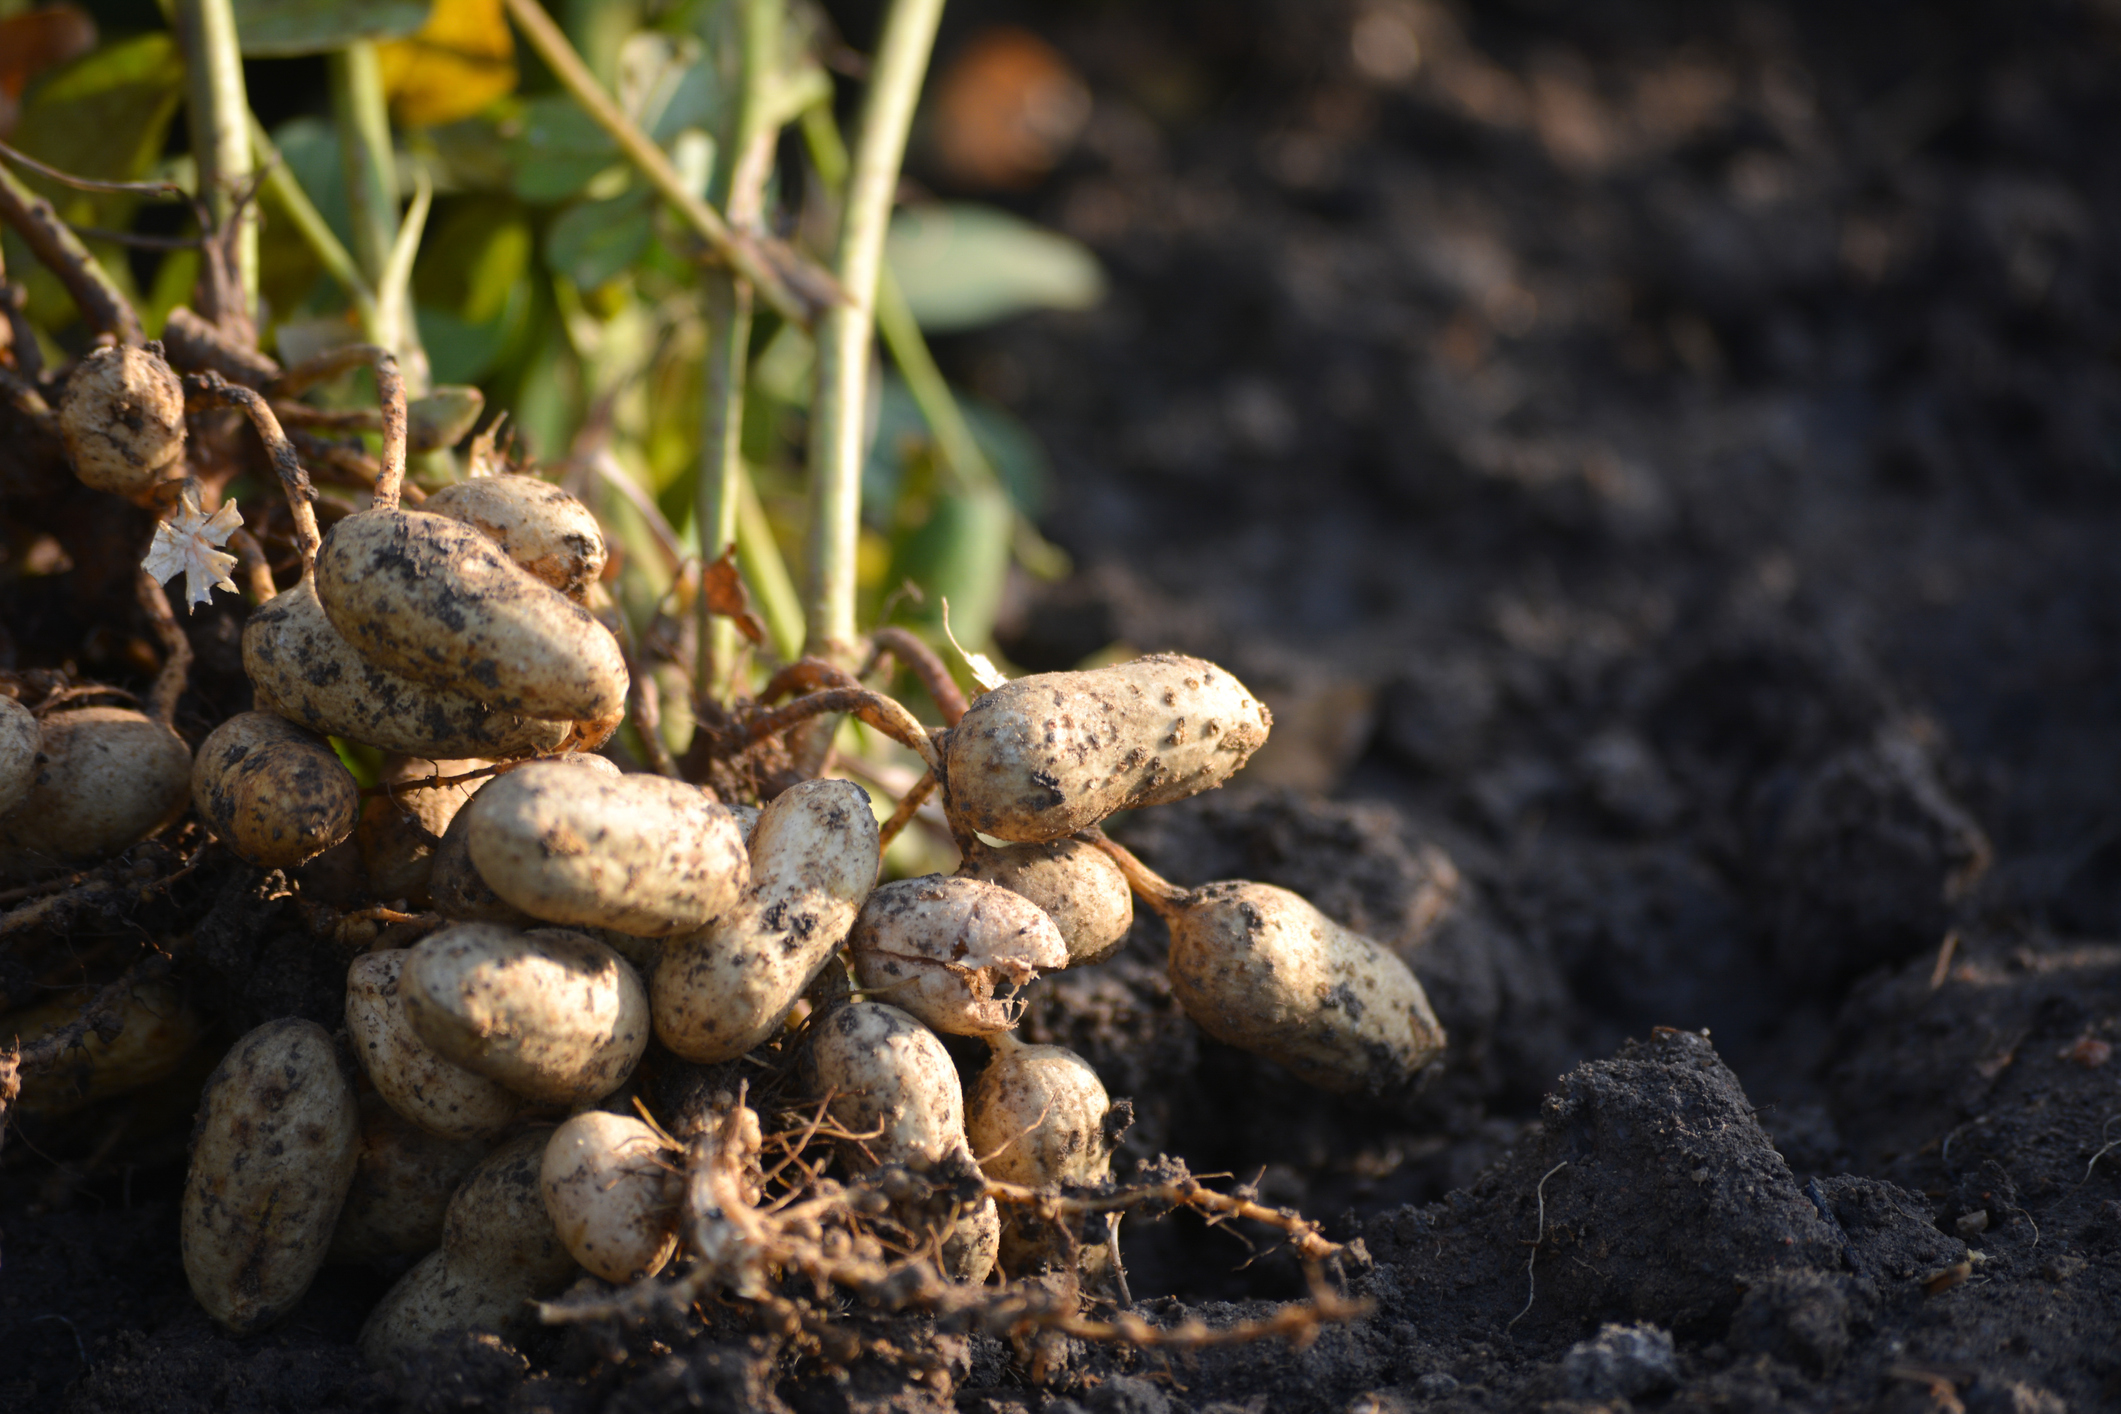 You ain’t seen nuttin’: Peanut blades to maximize yields